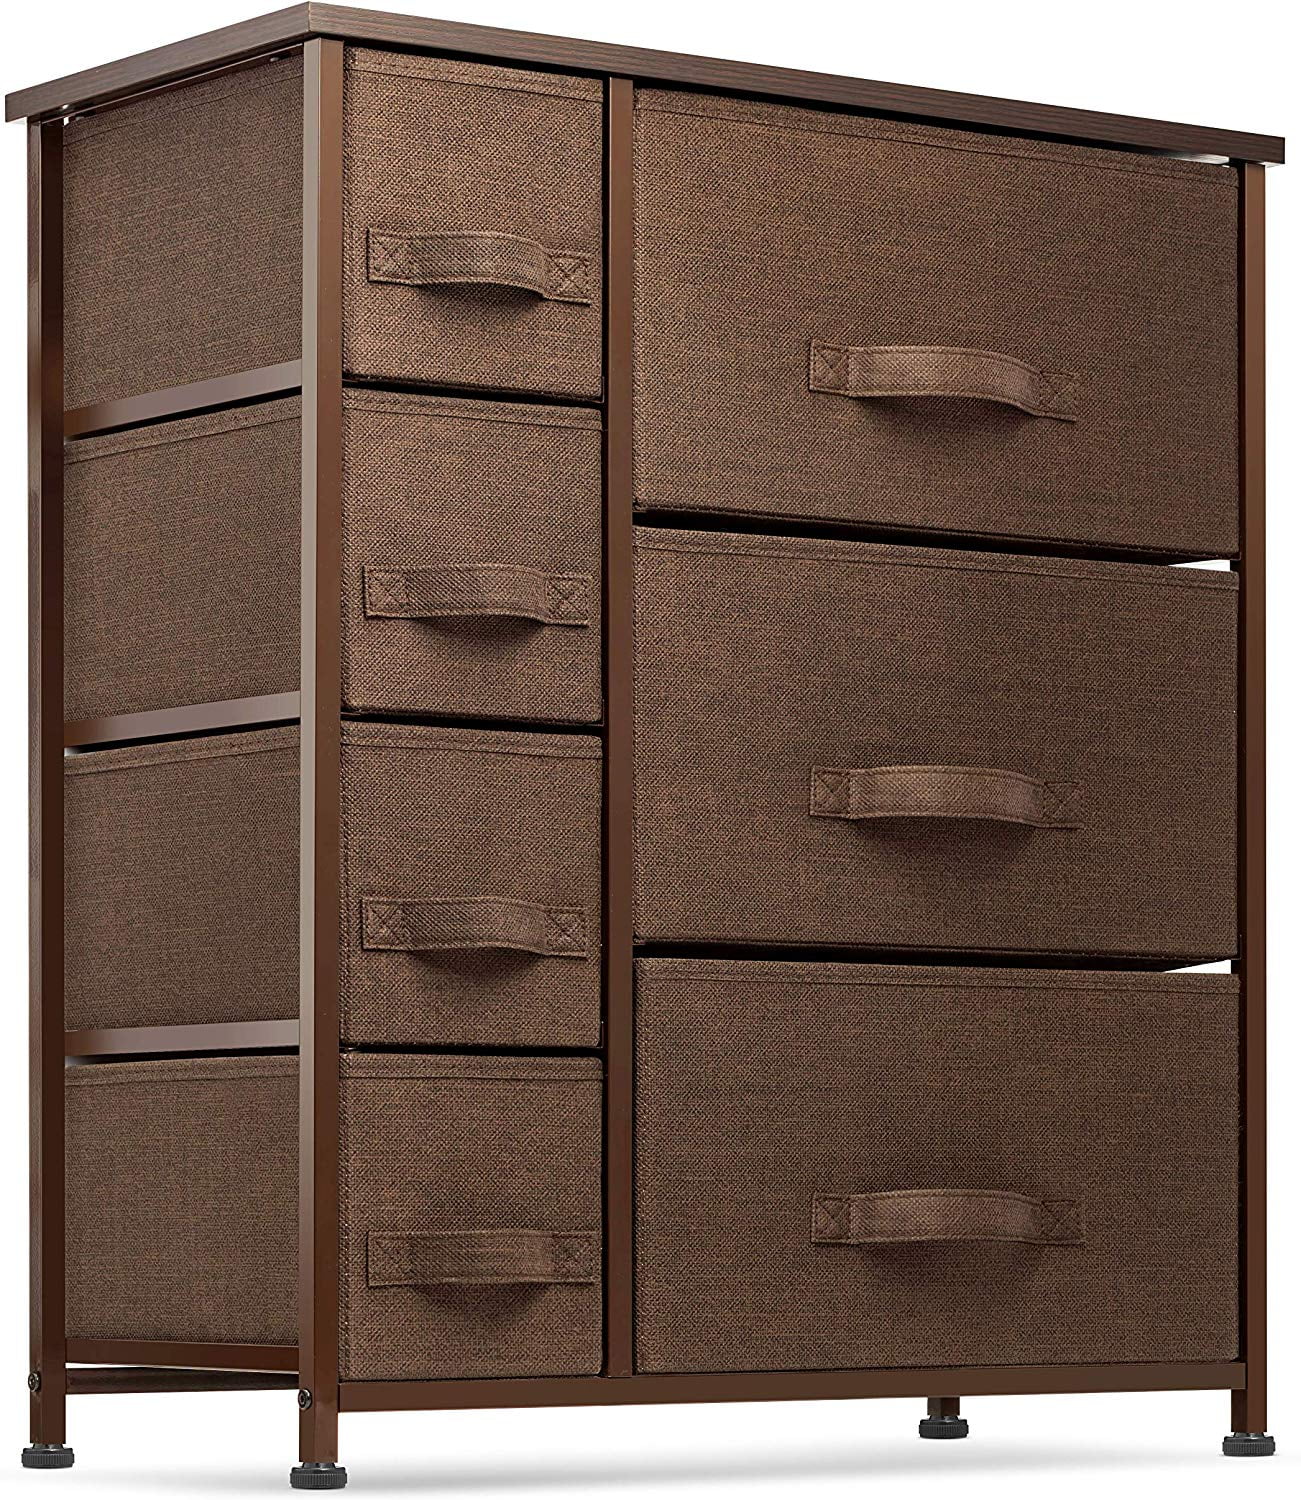 7 Drawers Dresser - Furniture Storage Tower Unit for Bedroom, Hallway,  Closet, Office Organization - Steel Frame, Wood Top, Easy Pull Fabric Bins  